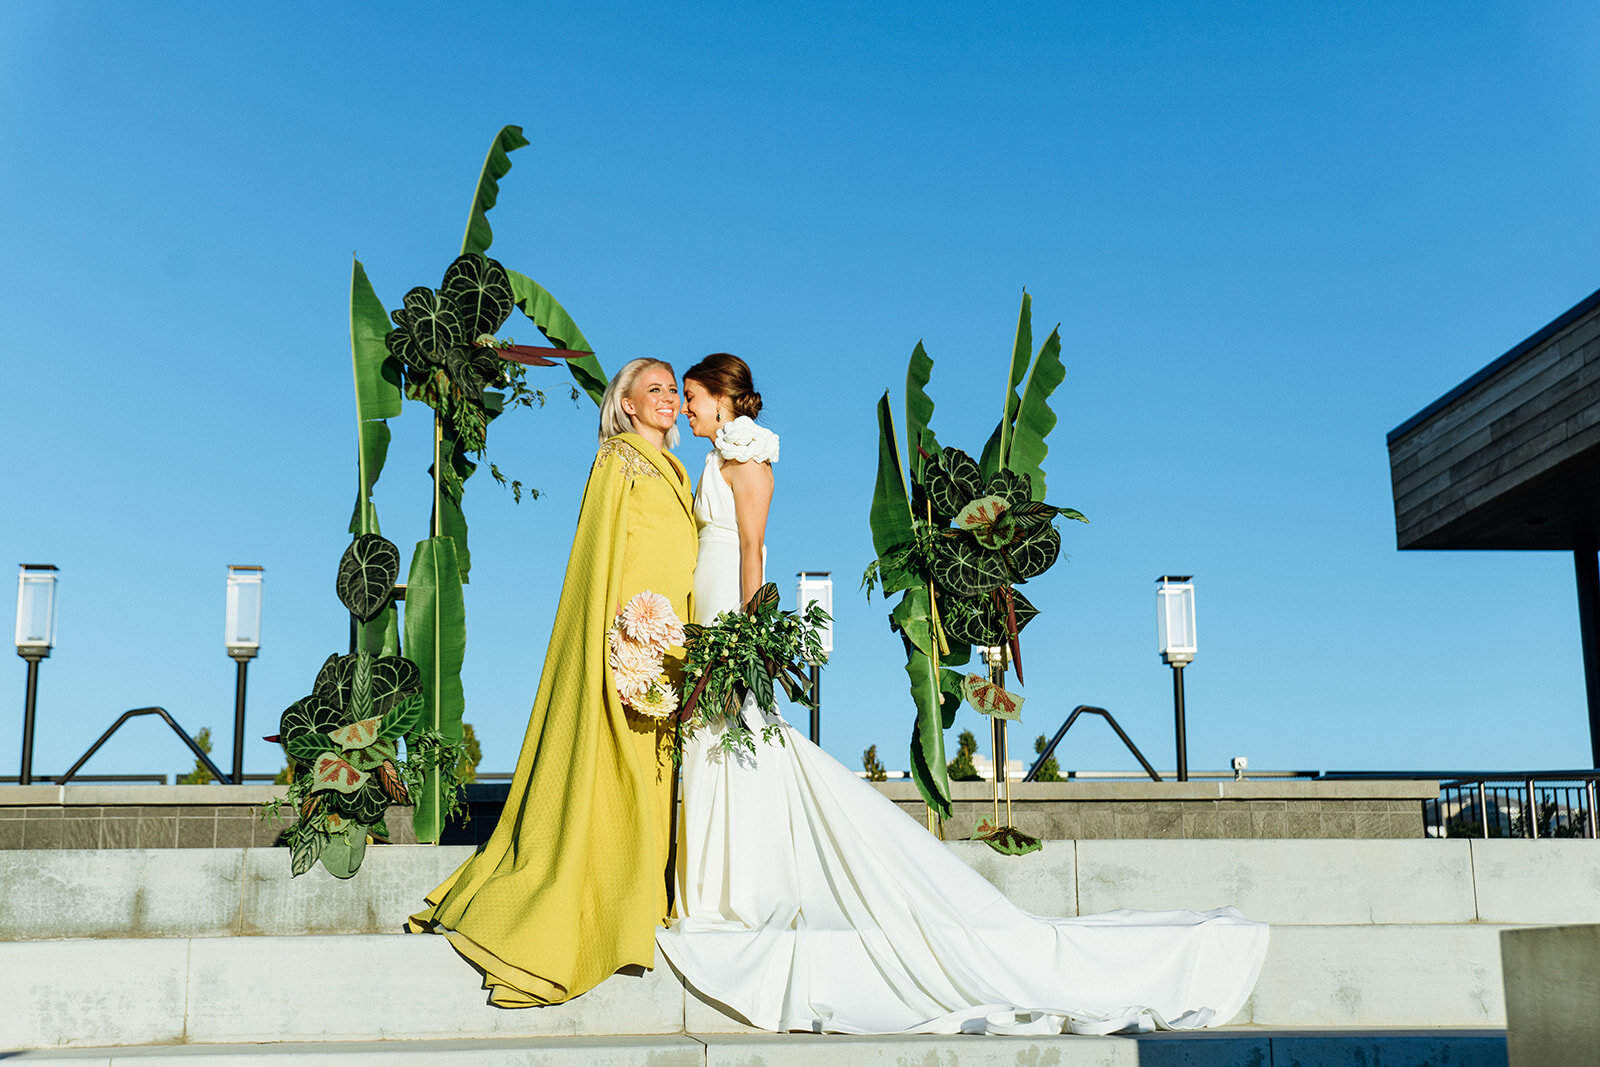 utah-bride-and-groom-wedding-magazine-lesbian-editorial-salt-lake-city-wedding-michael-cozzens-photo-video-602.jpg